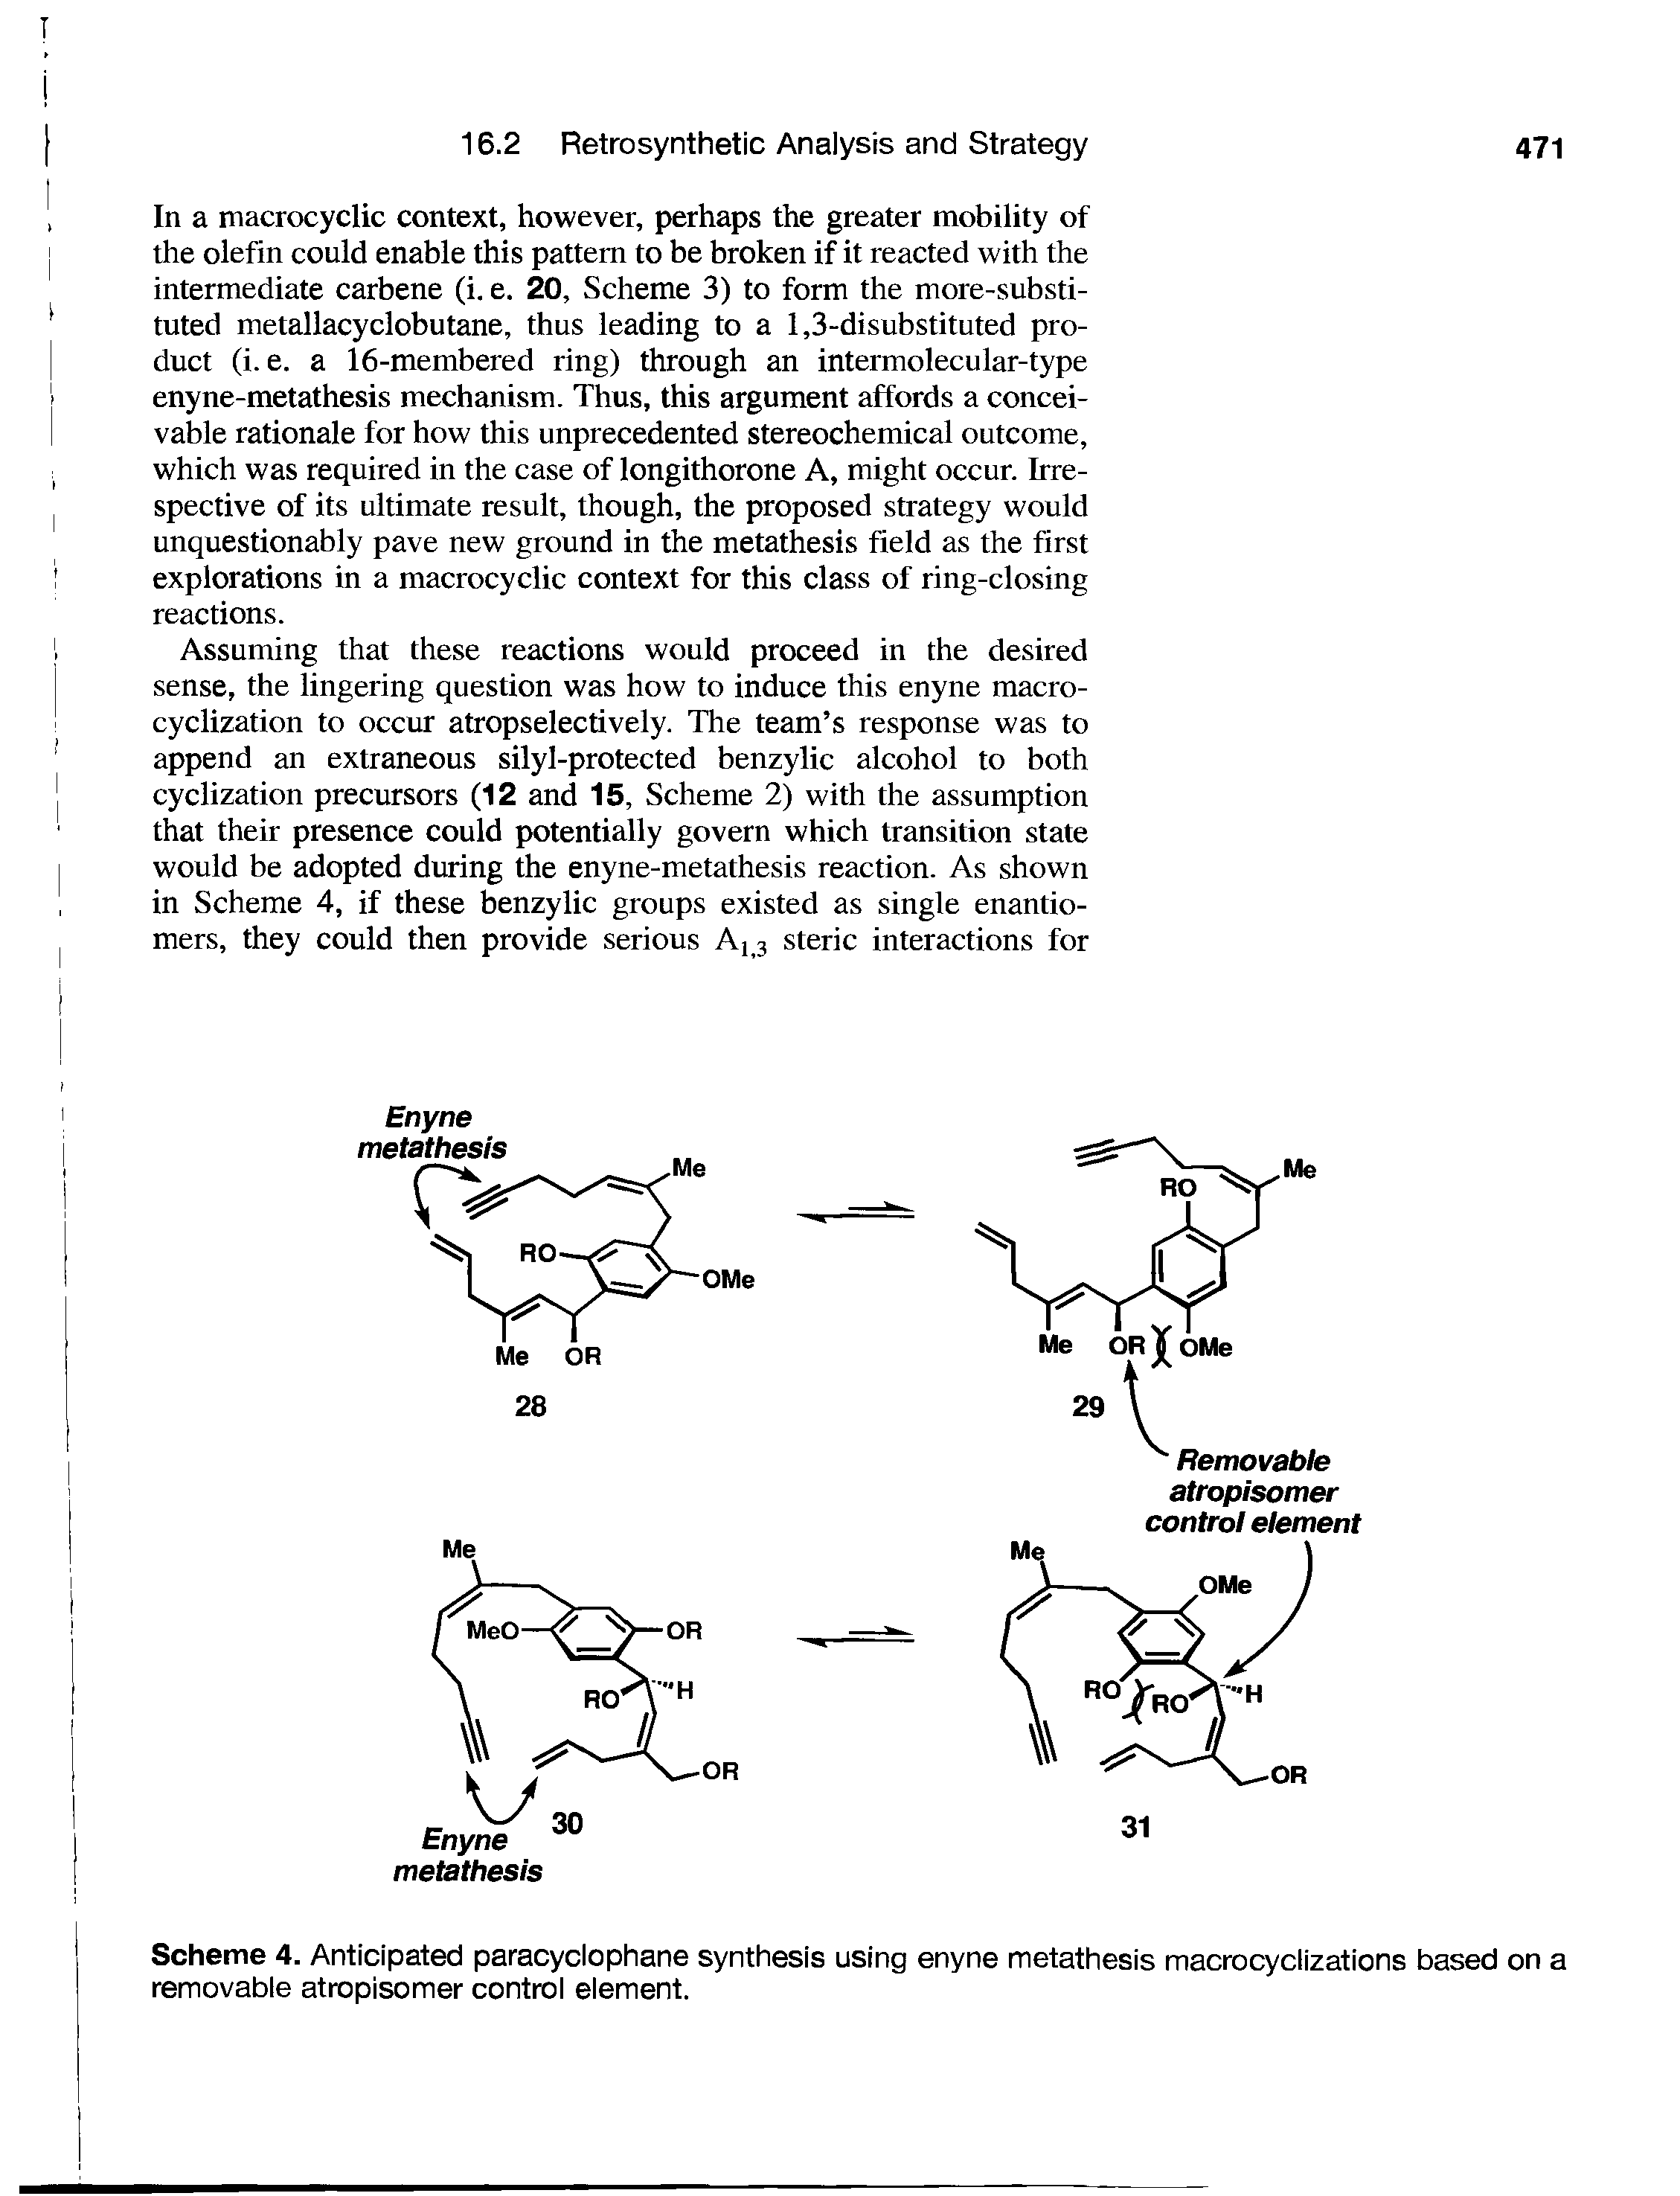 Scheme 4. Anticipated paracyclophane synthesis using enyne metathesis macrocyciizations based on a removabie atropisomer controi eiement.